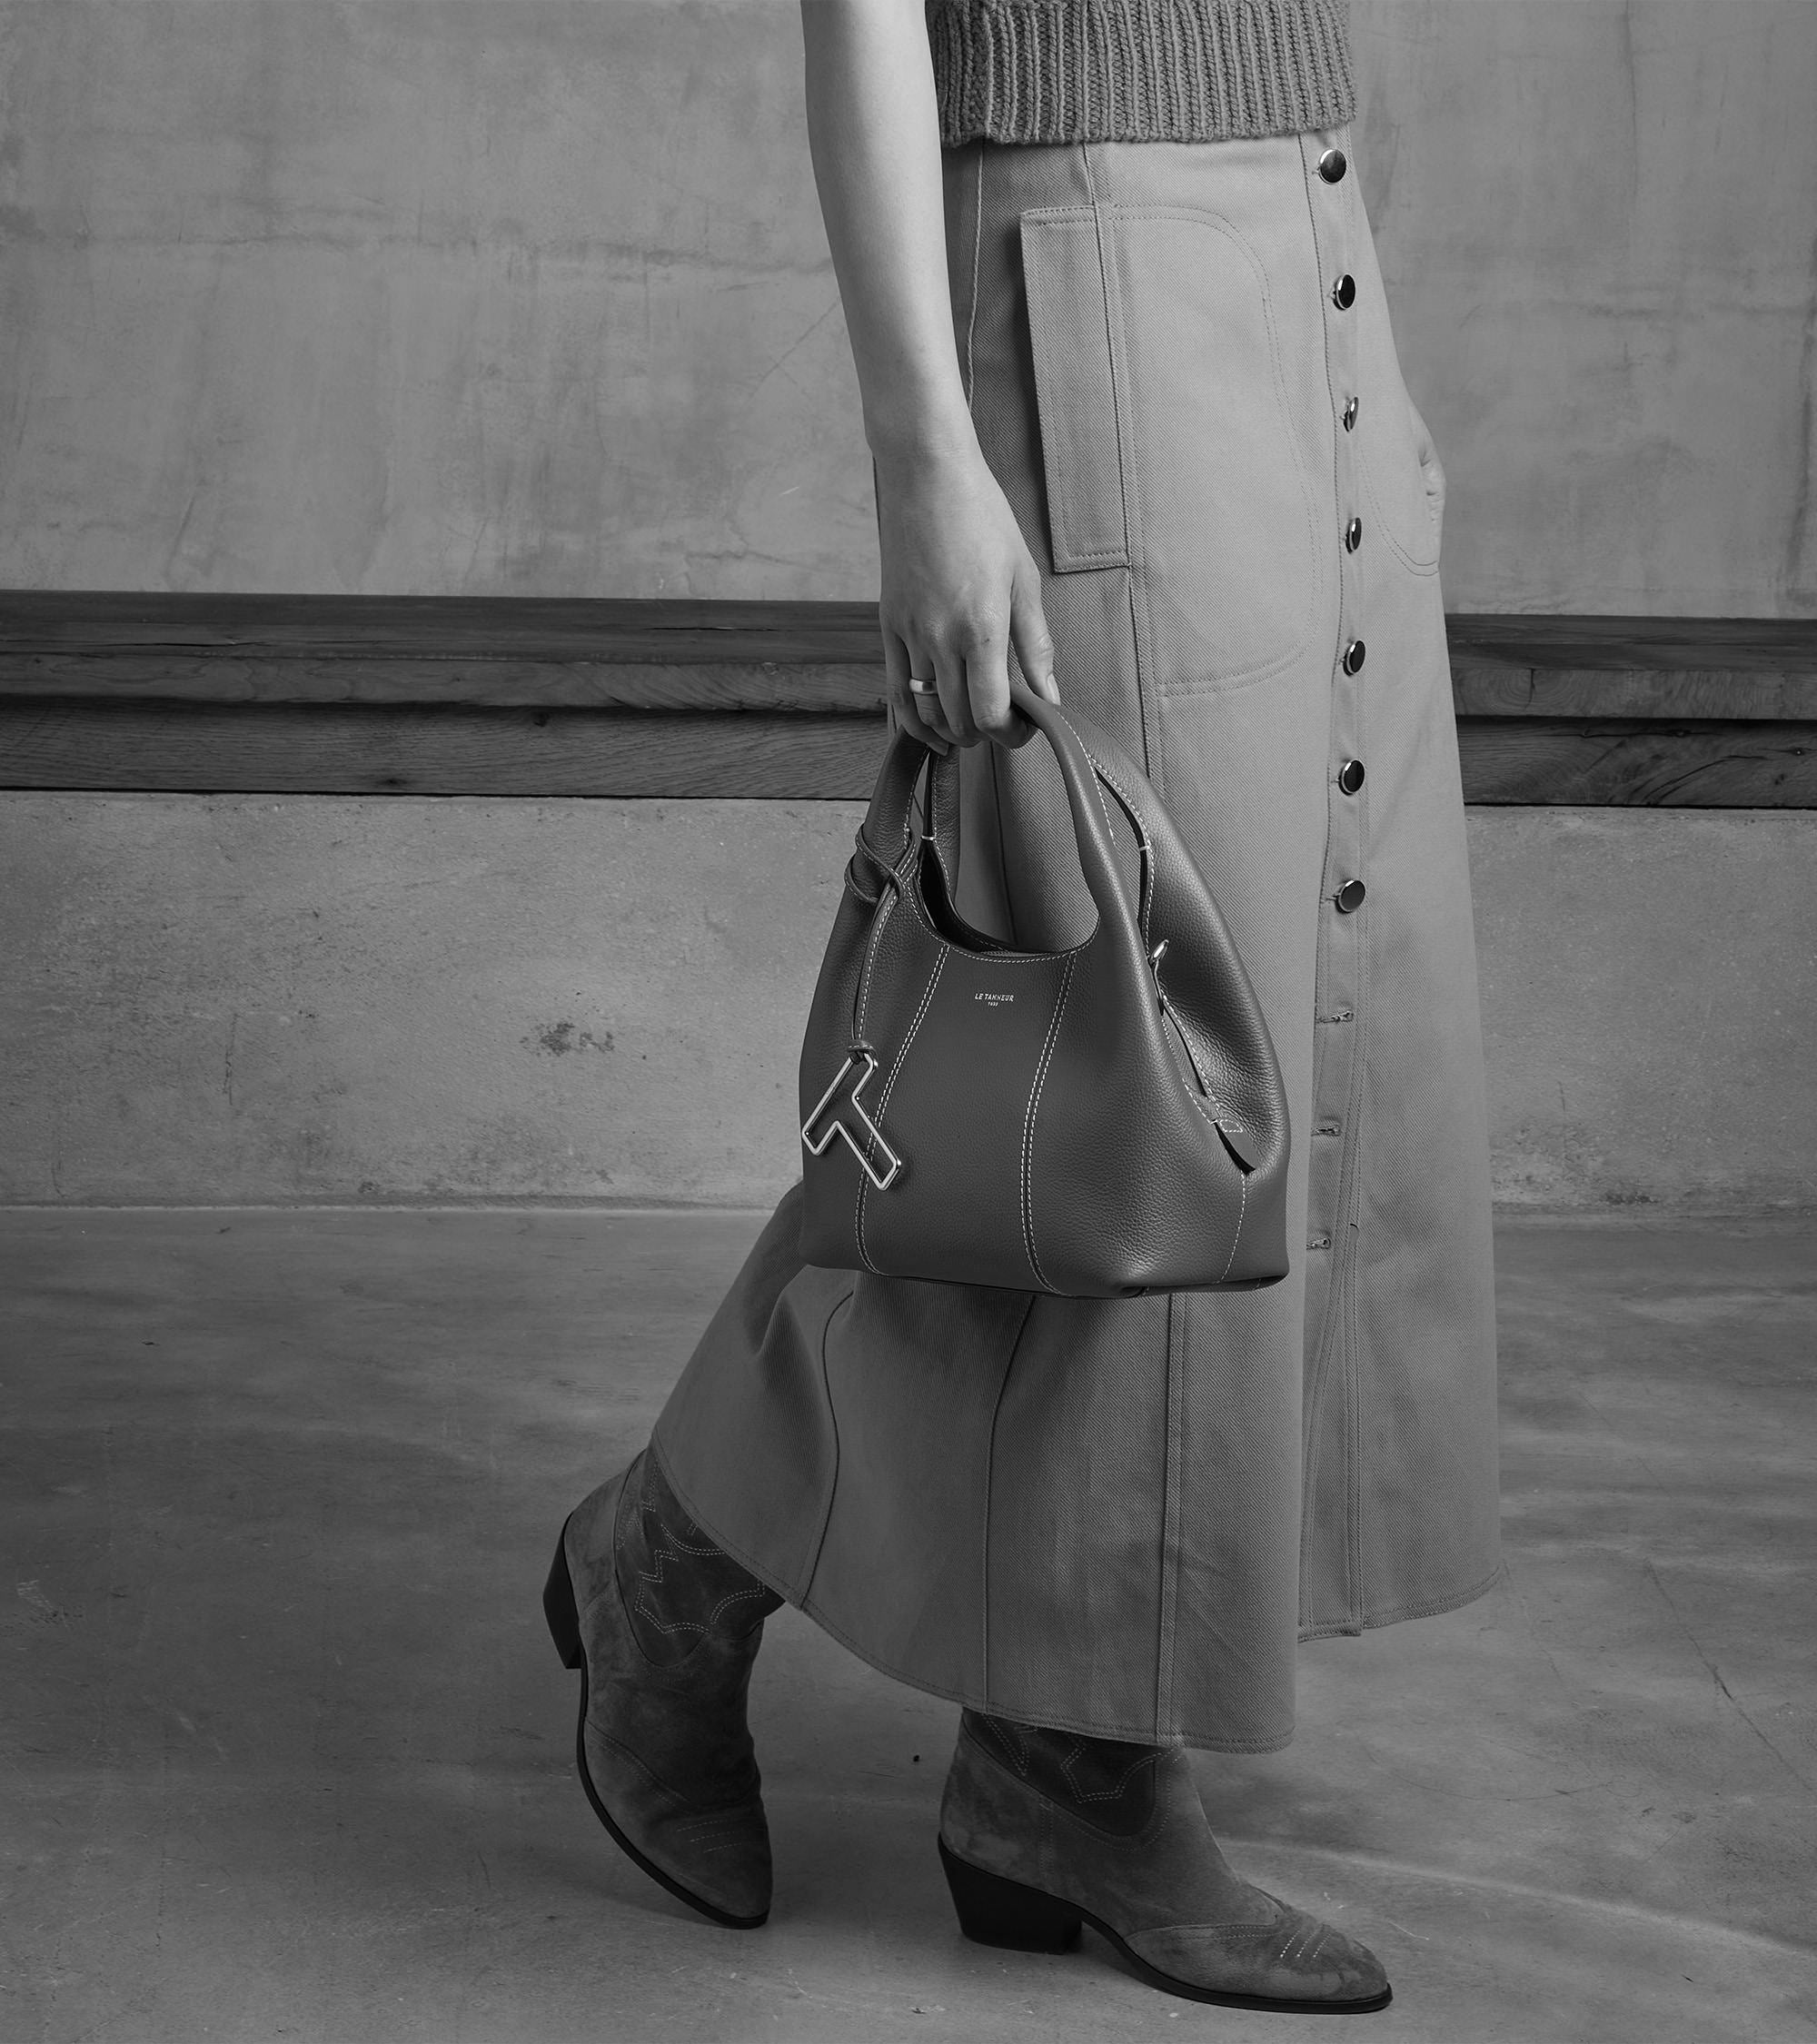 Juliette small handbag in pebbled leather